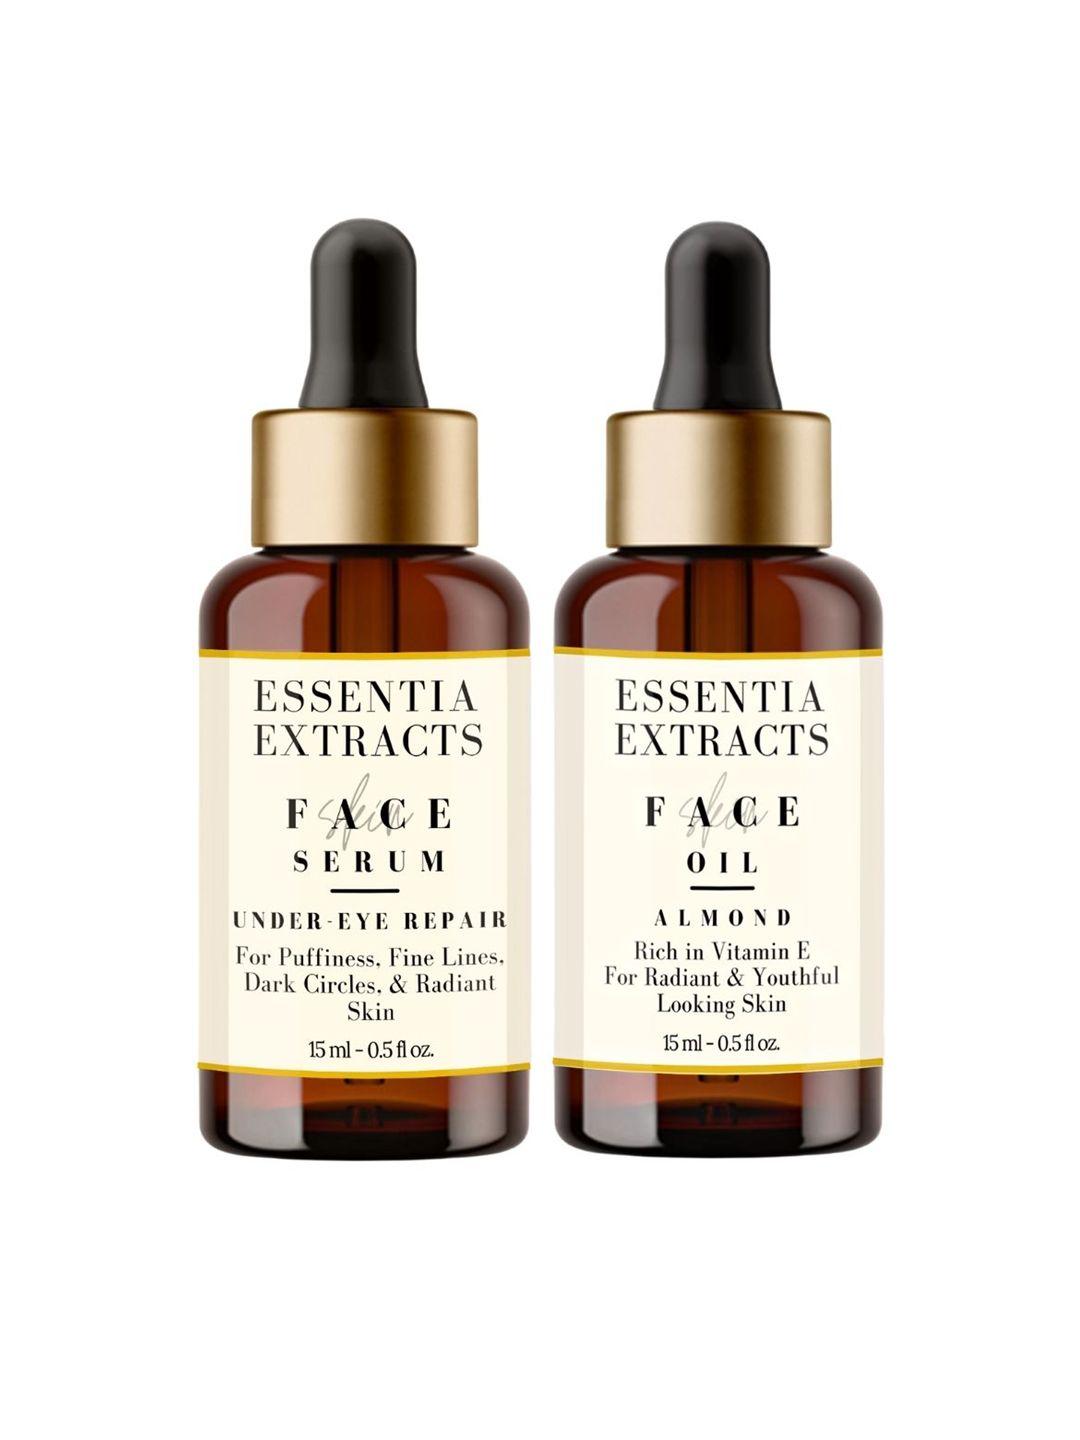 essentia extracts set of almond facial oil & under eye repair serum - 15 ml each